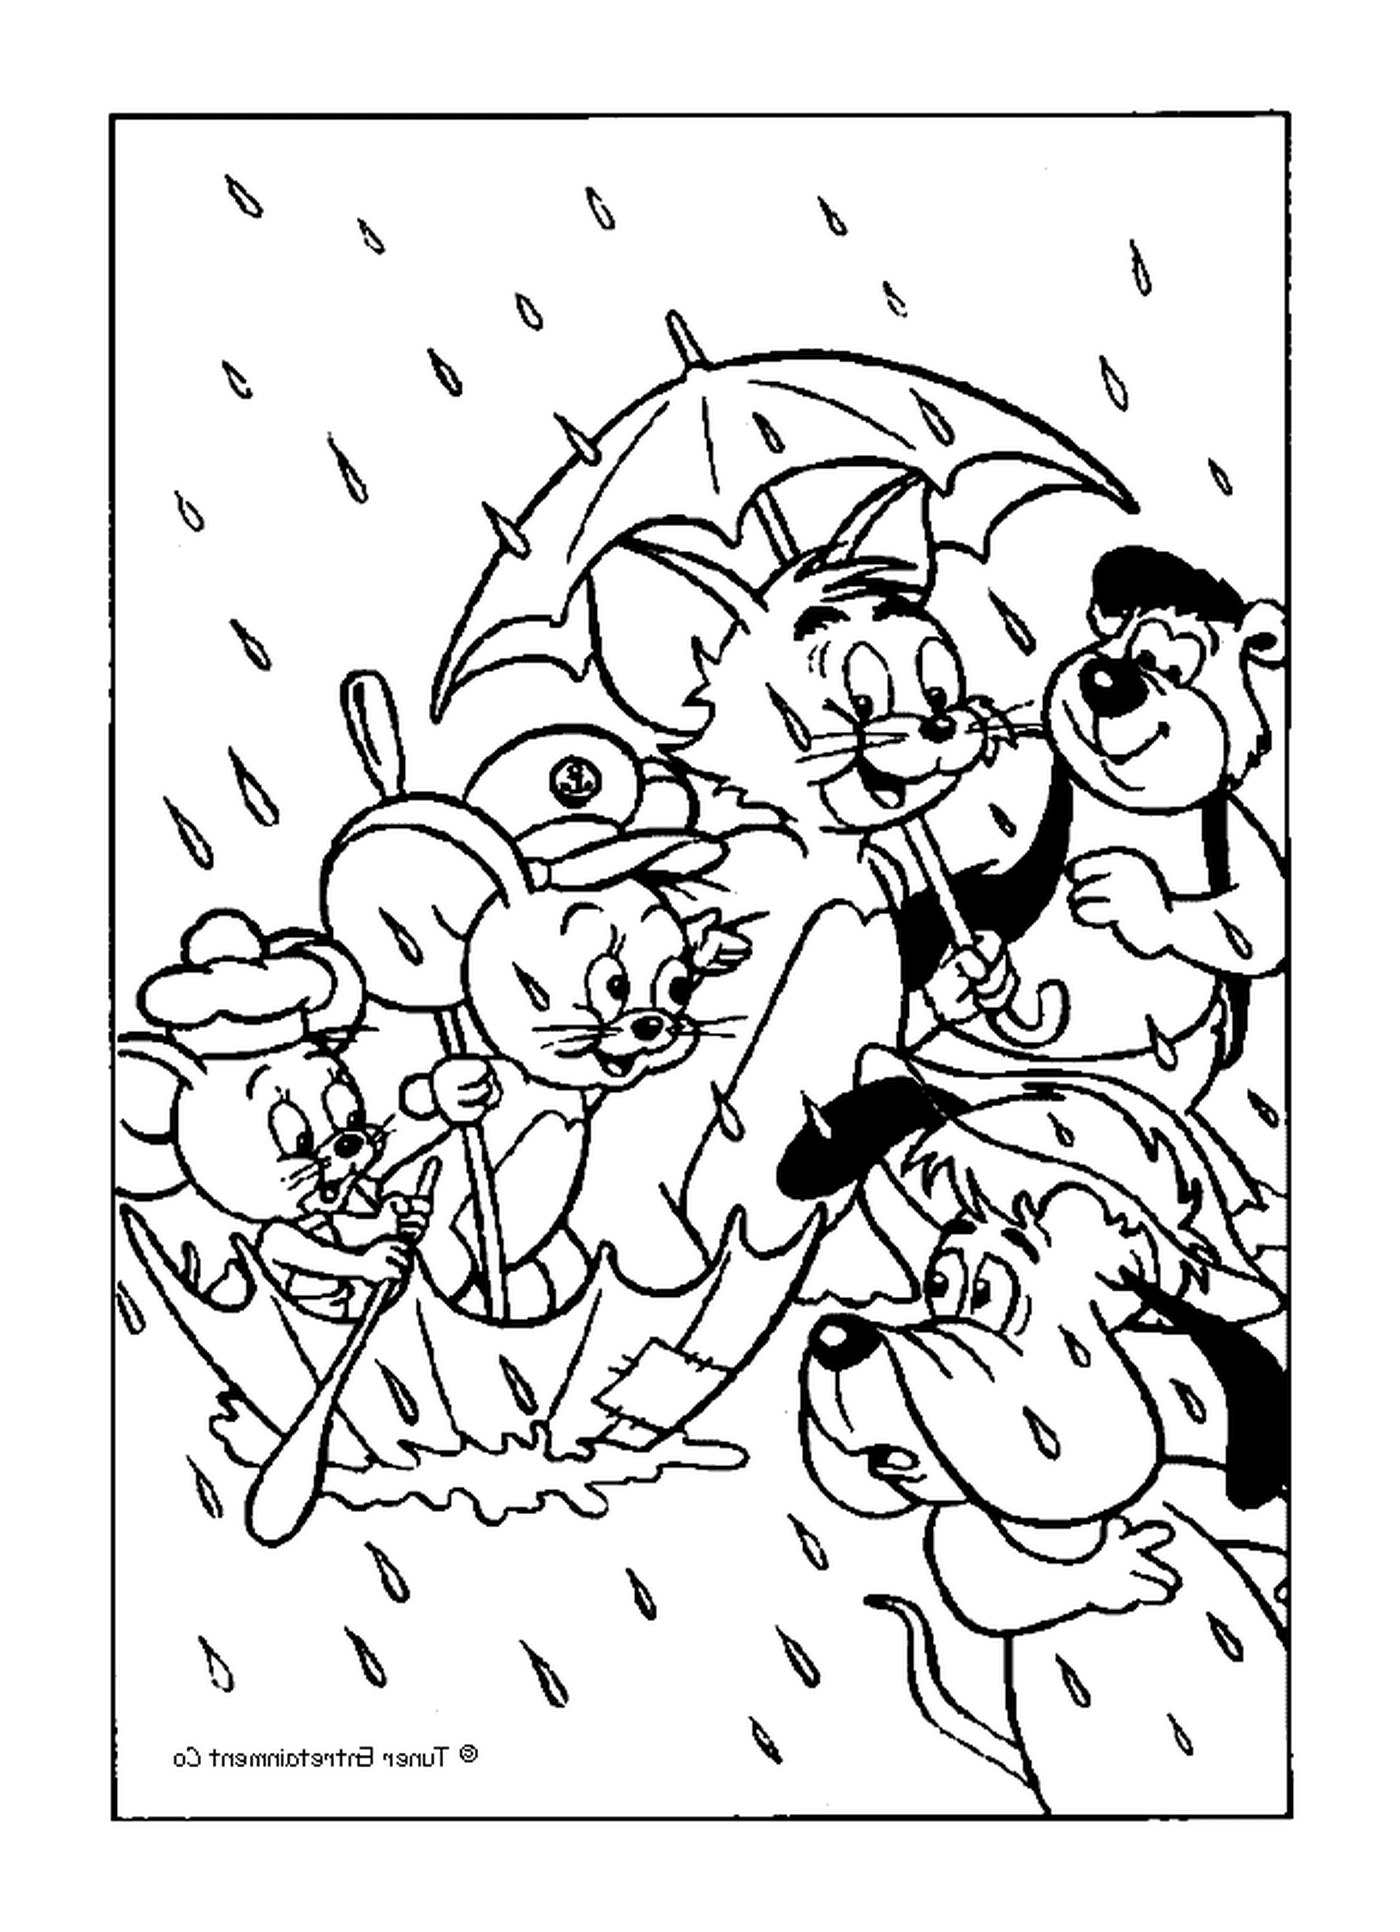  Tom e Jerry na chuva 